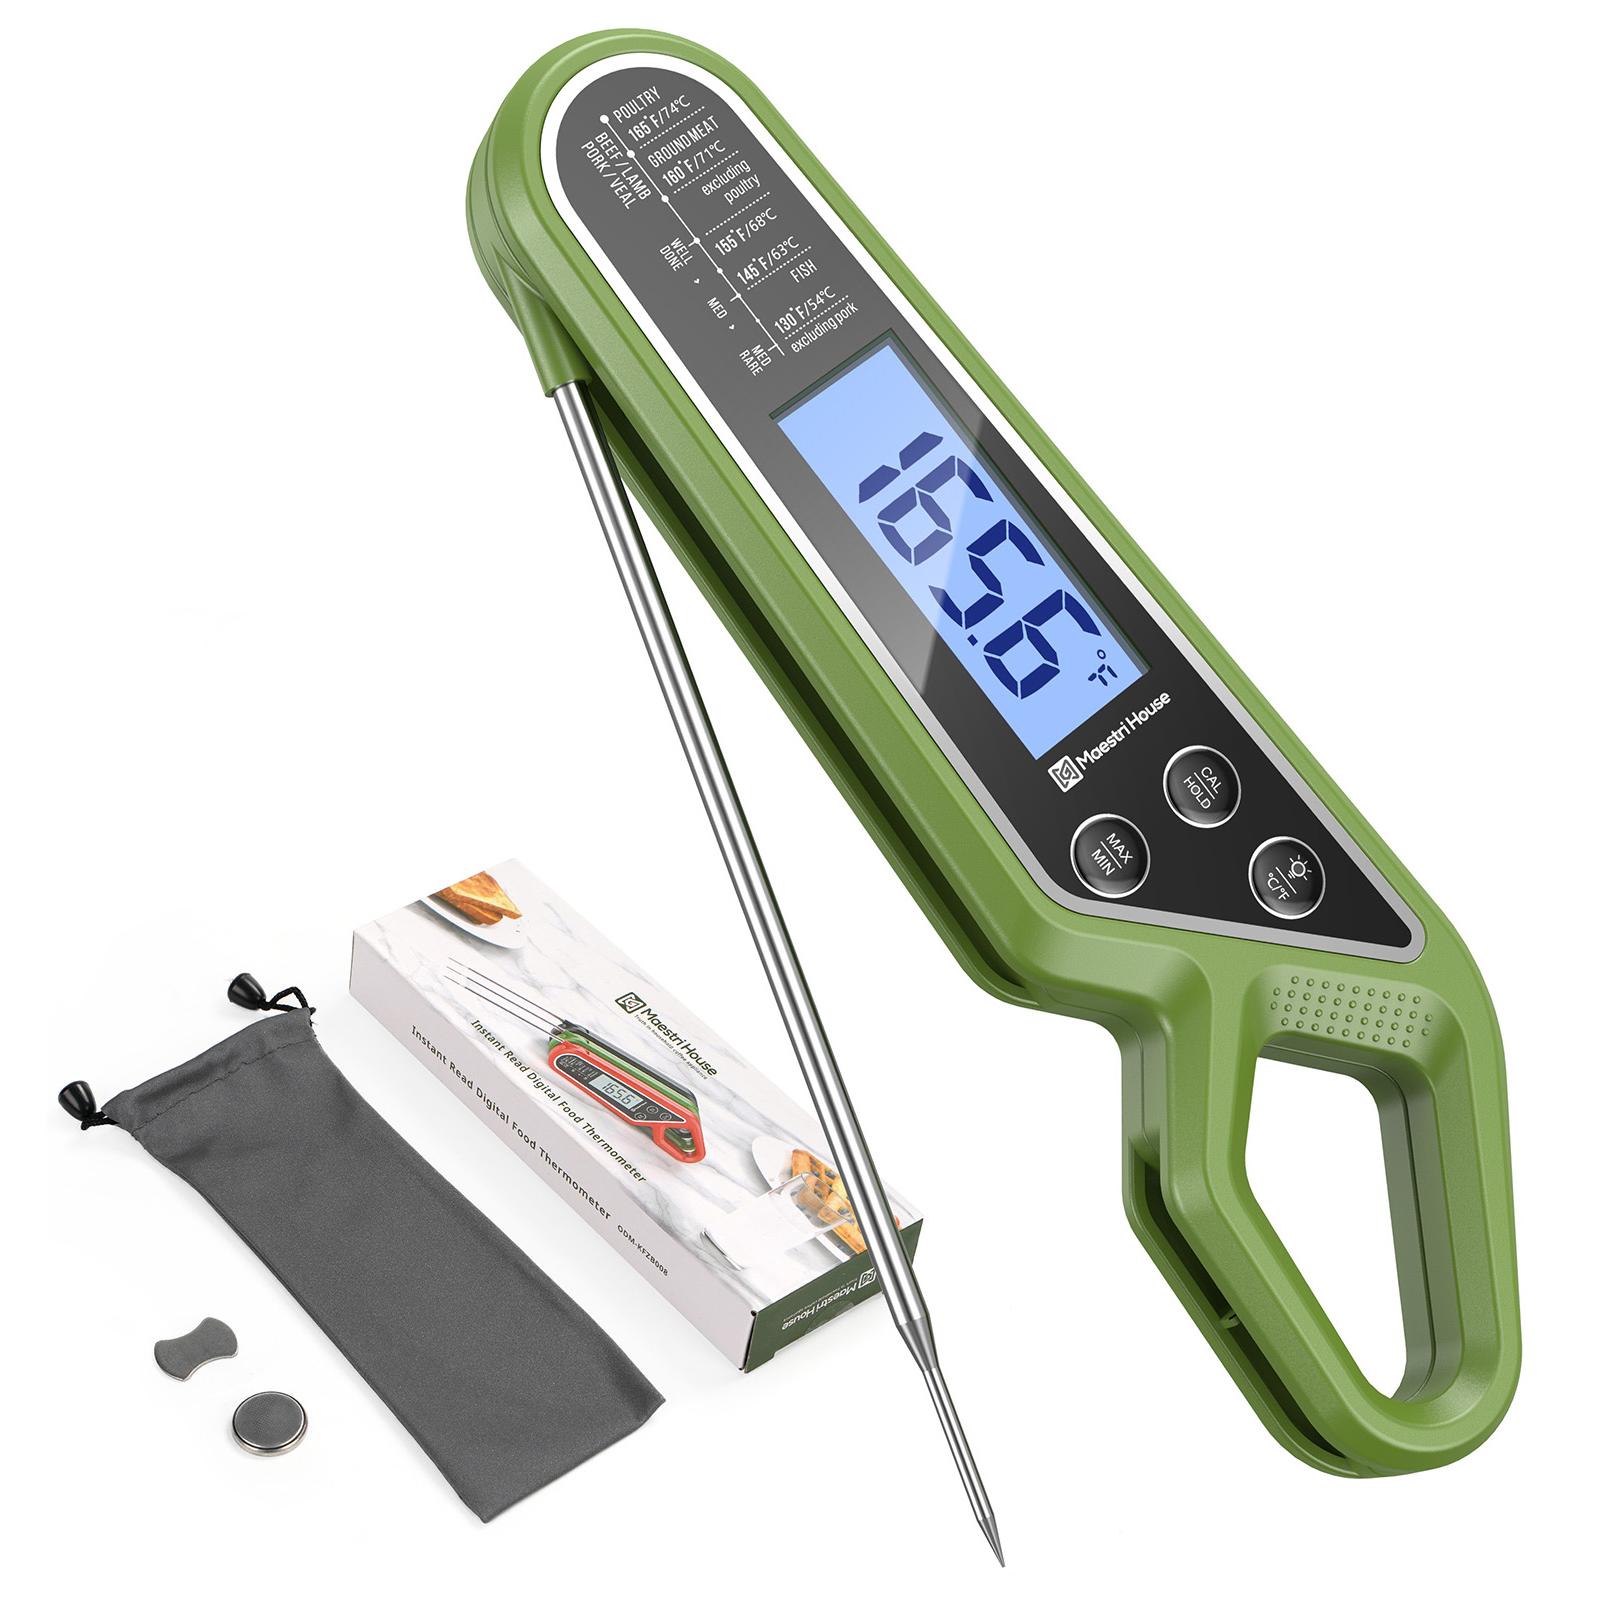 International Digital Probe Thermometers - CDN Measurement Tools